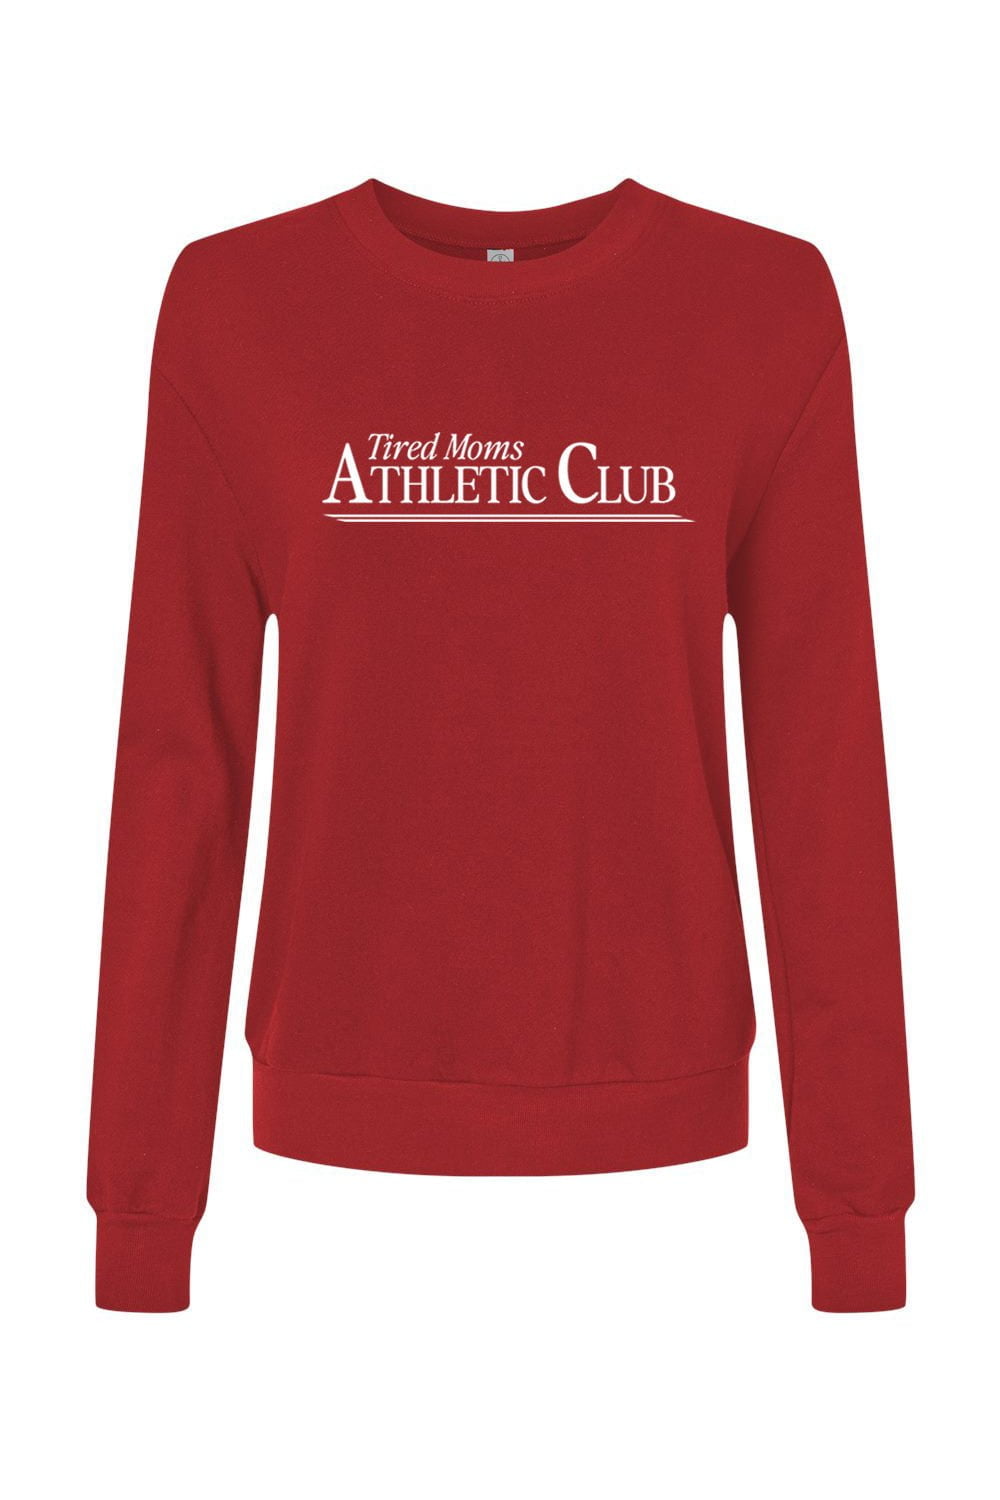 Sarah Marie Design Studio Sweatshirt XSmall / Red Tired Moms Athletic Club Women's Sweatshirt